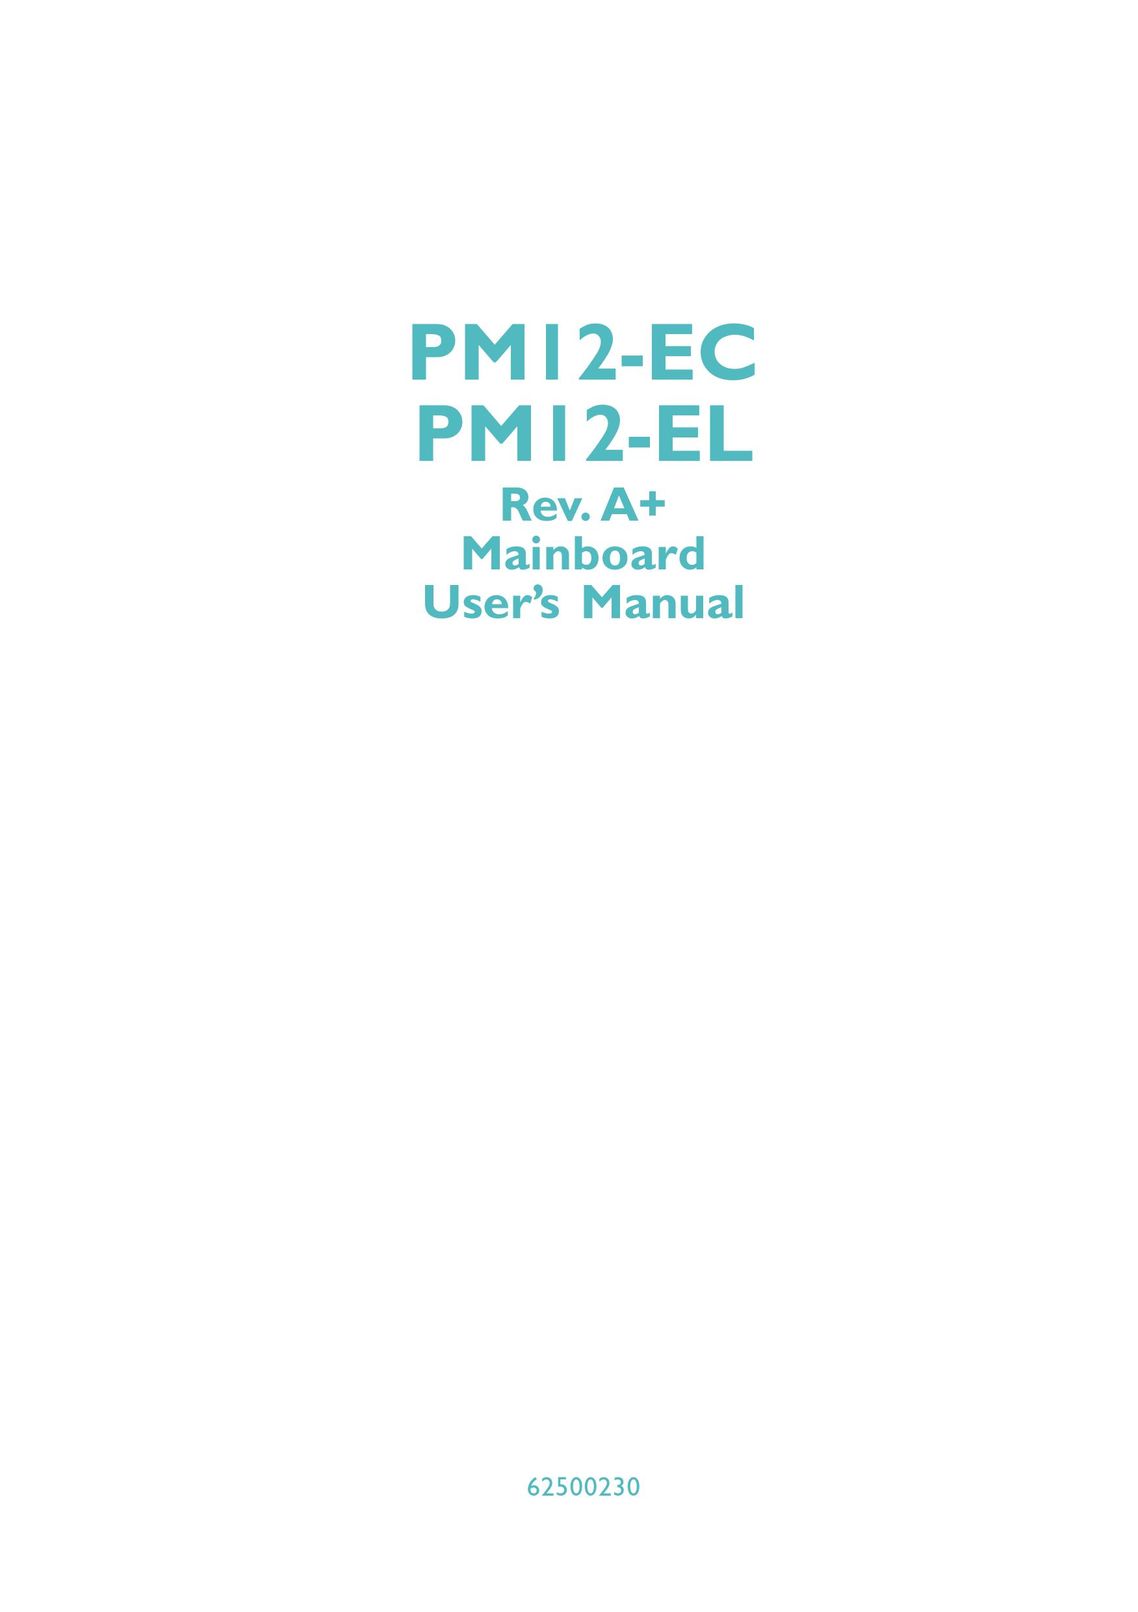 DFI PM12-EC Computer Hardware User Manual